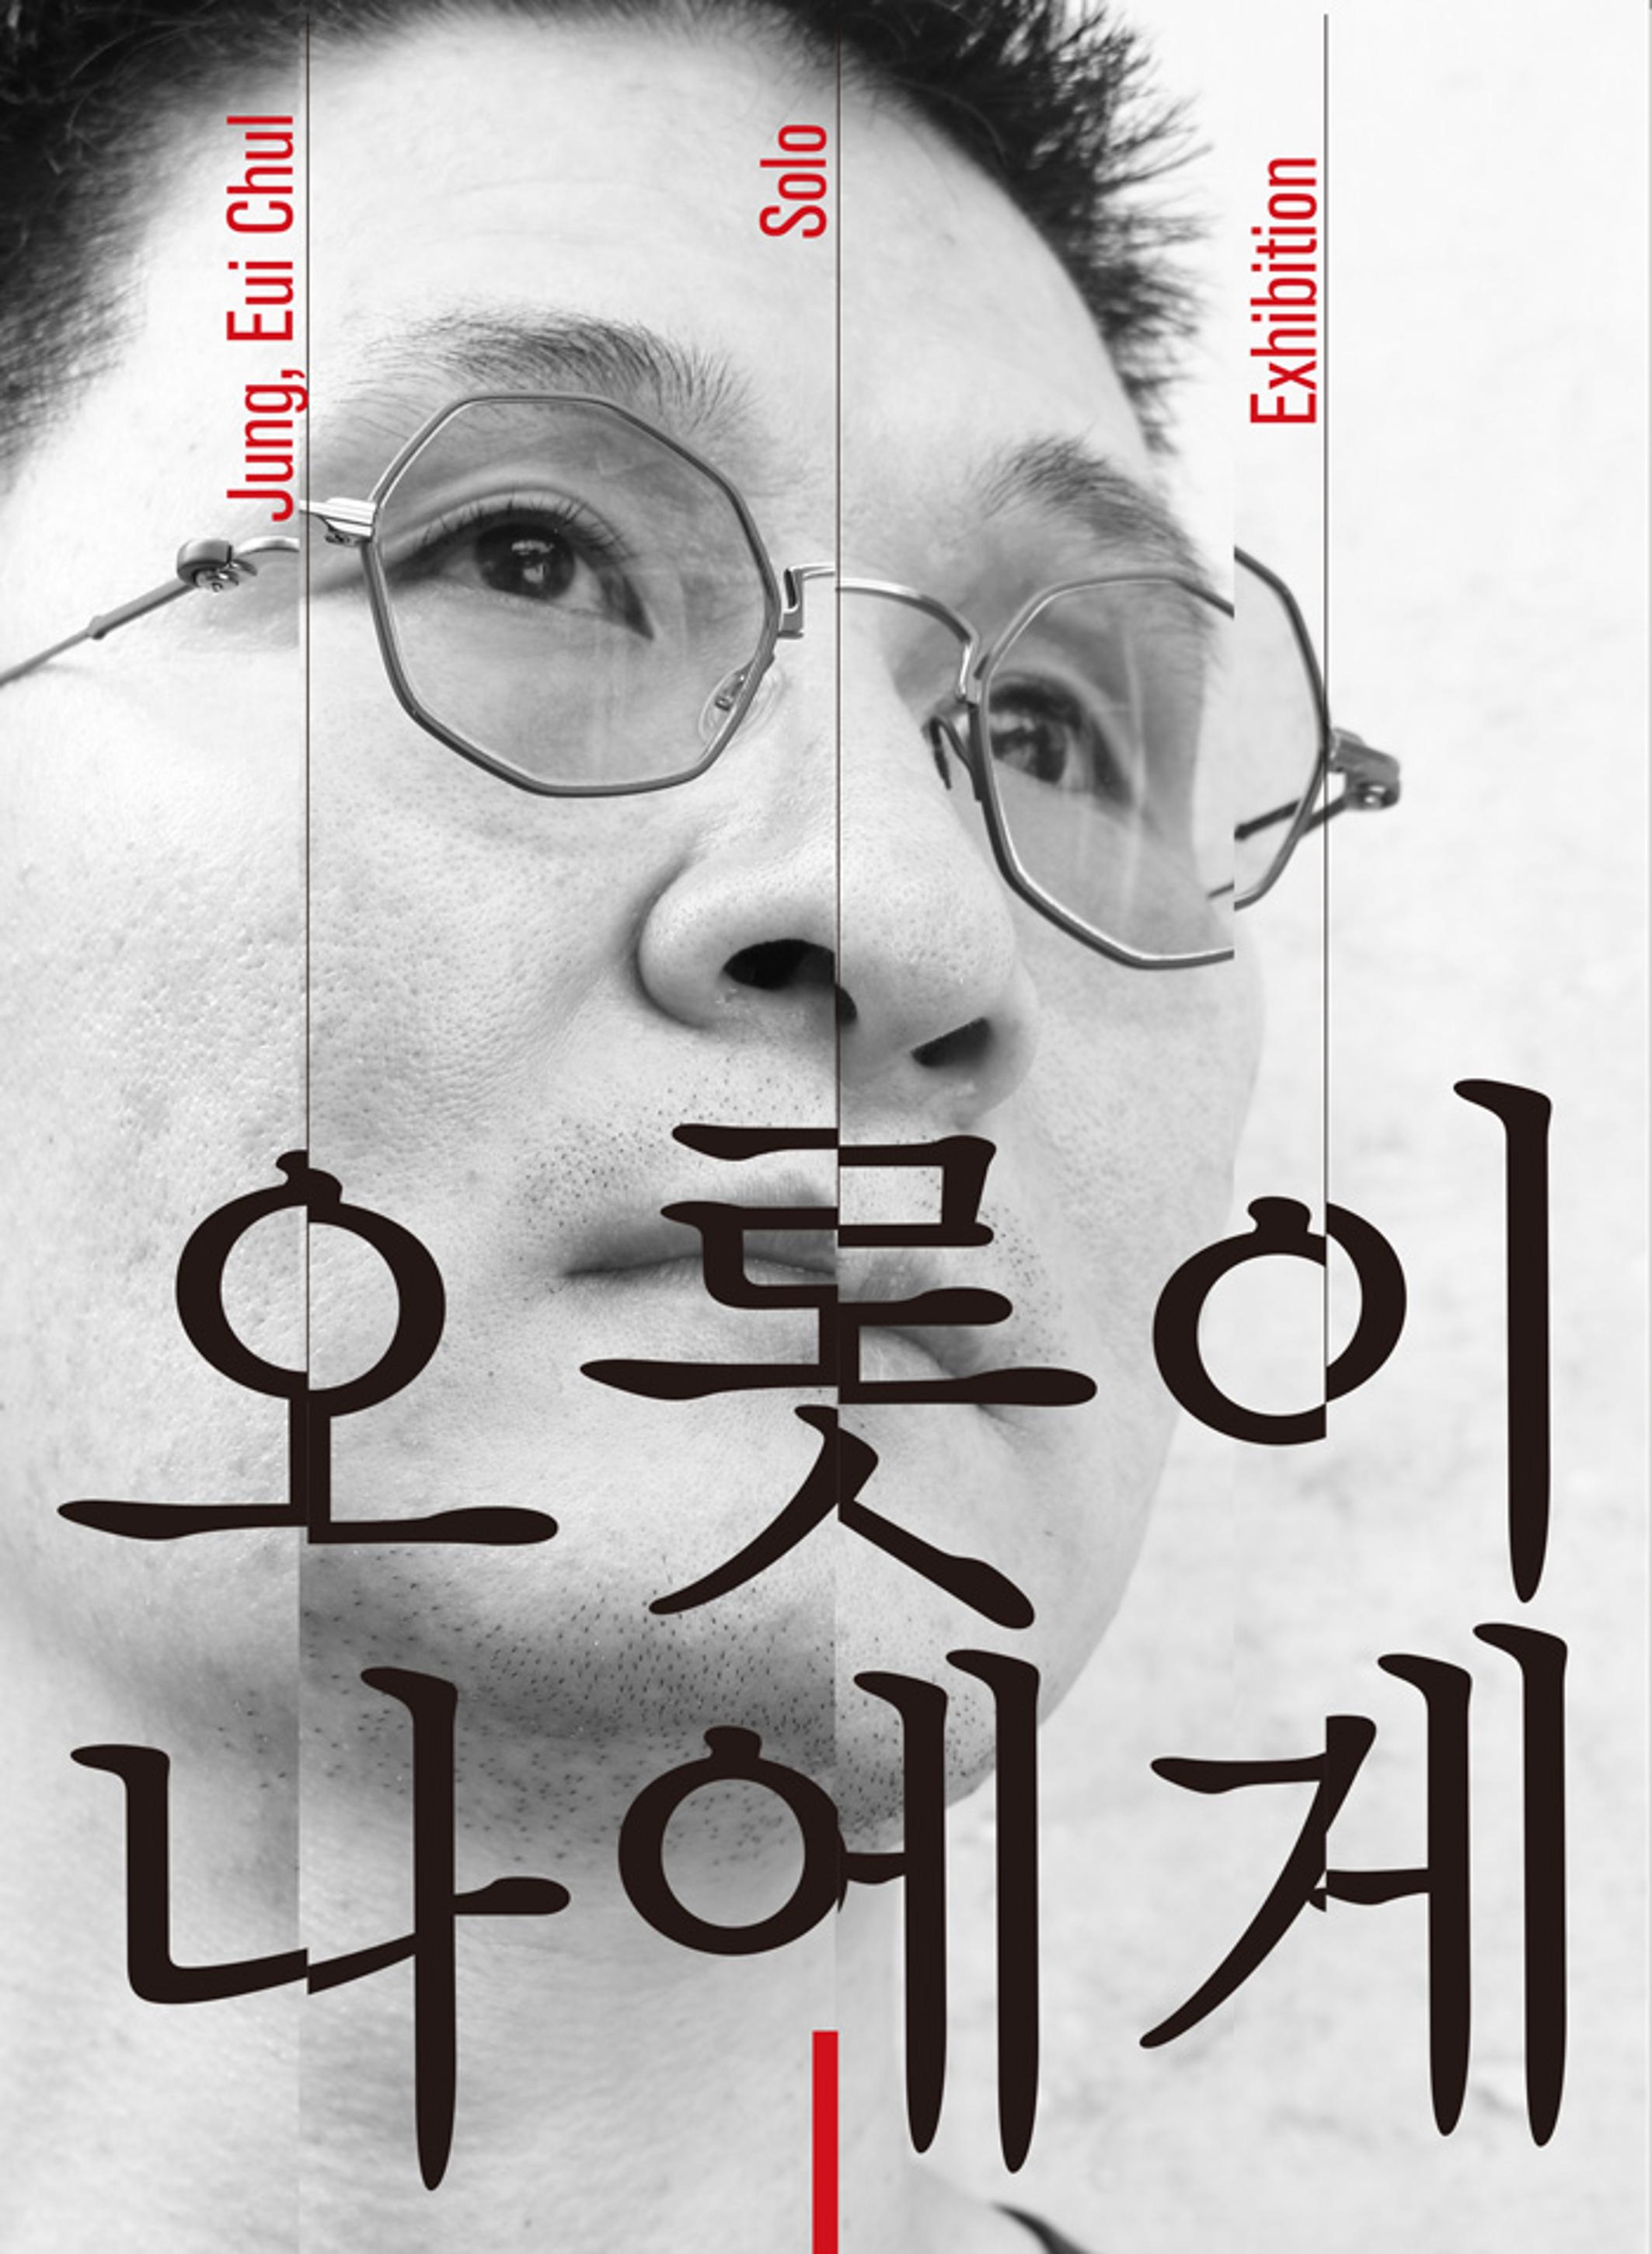 <p>Jung, Eui Chul Solo Exhibition</p>
<h1>오롯이 나에게</h1>